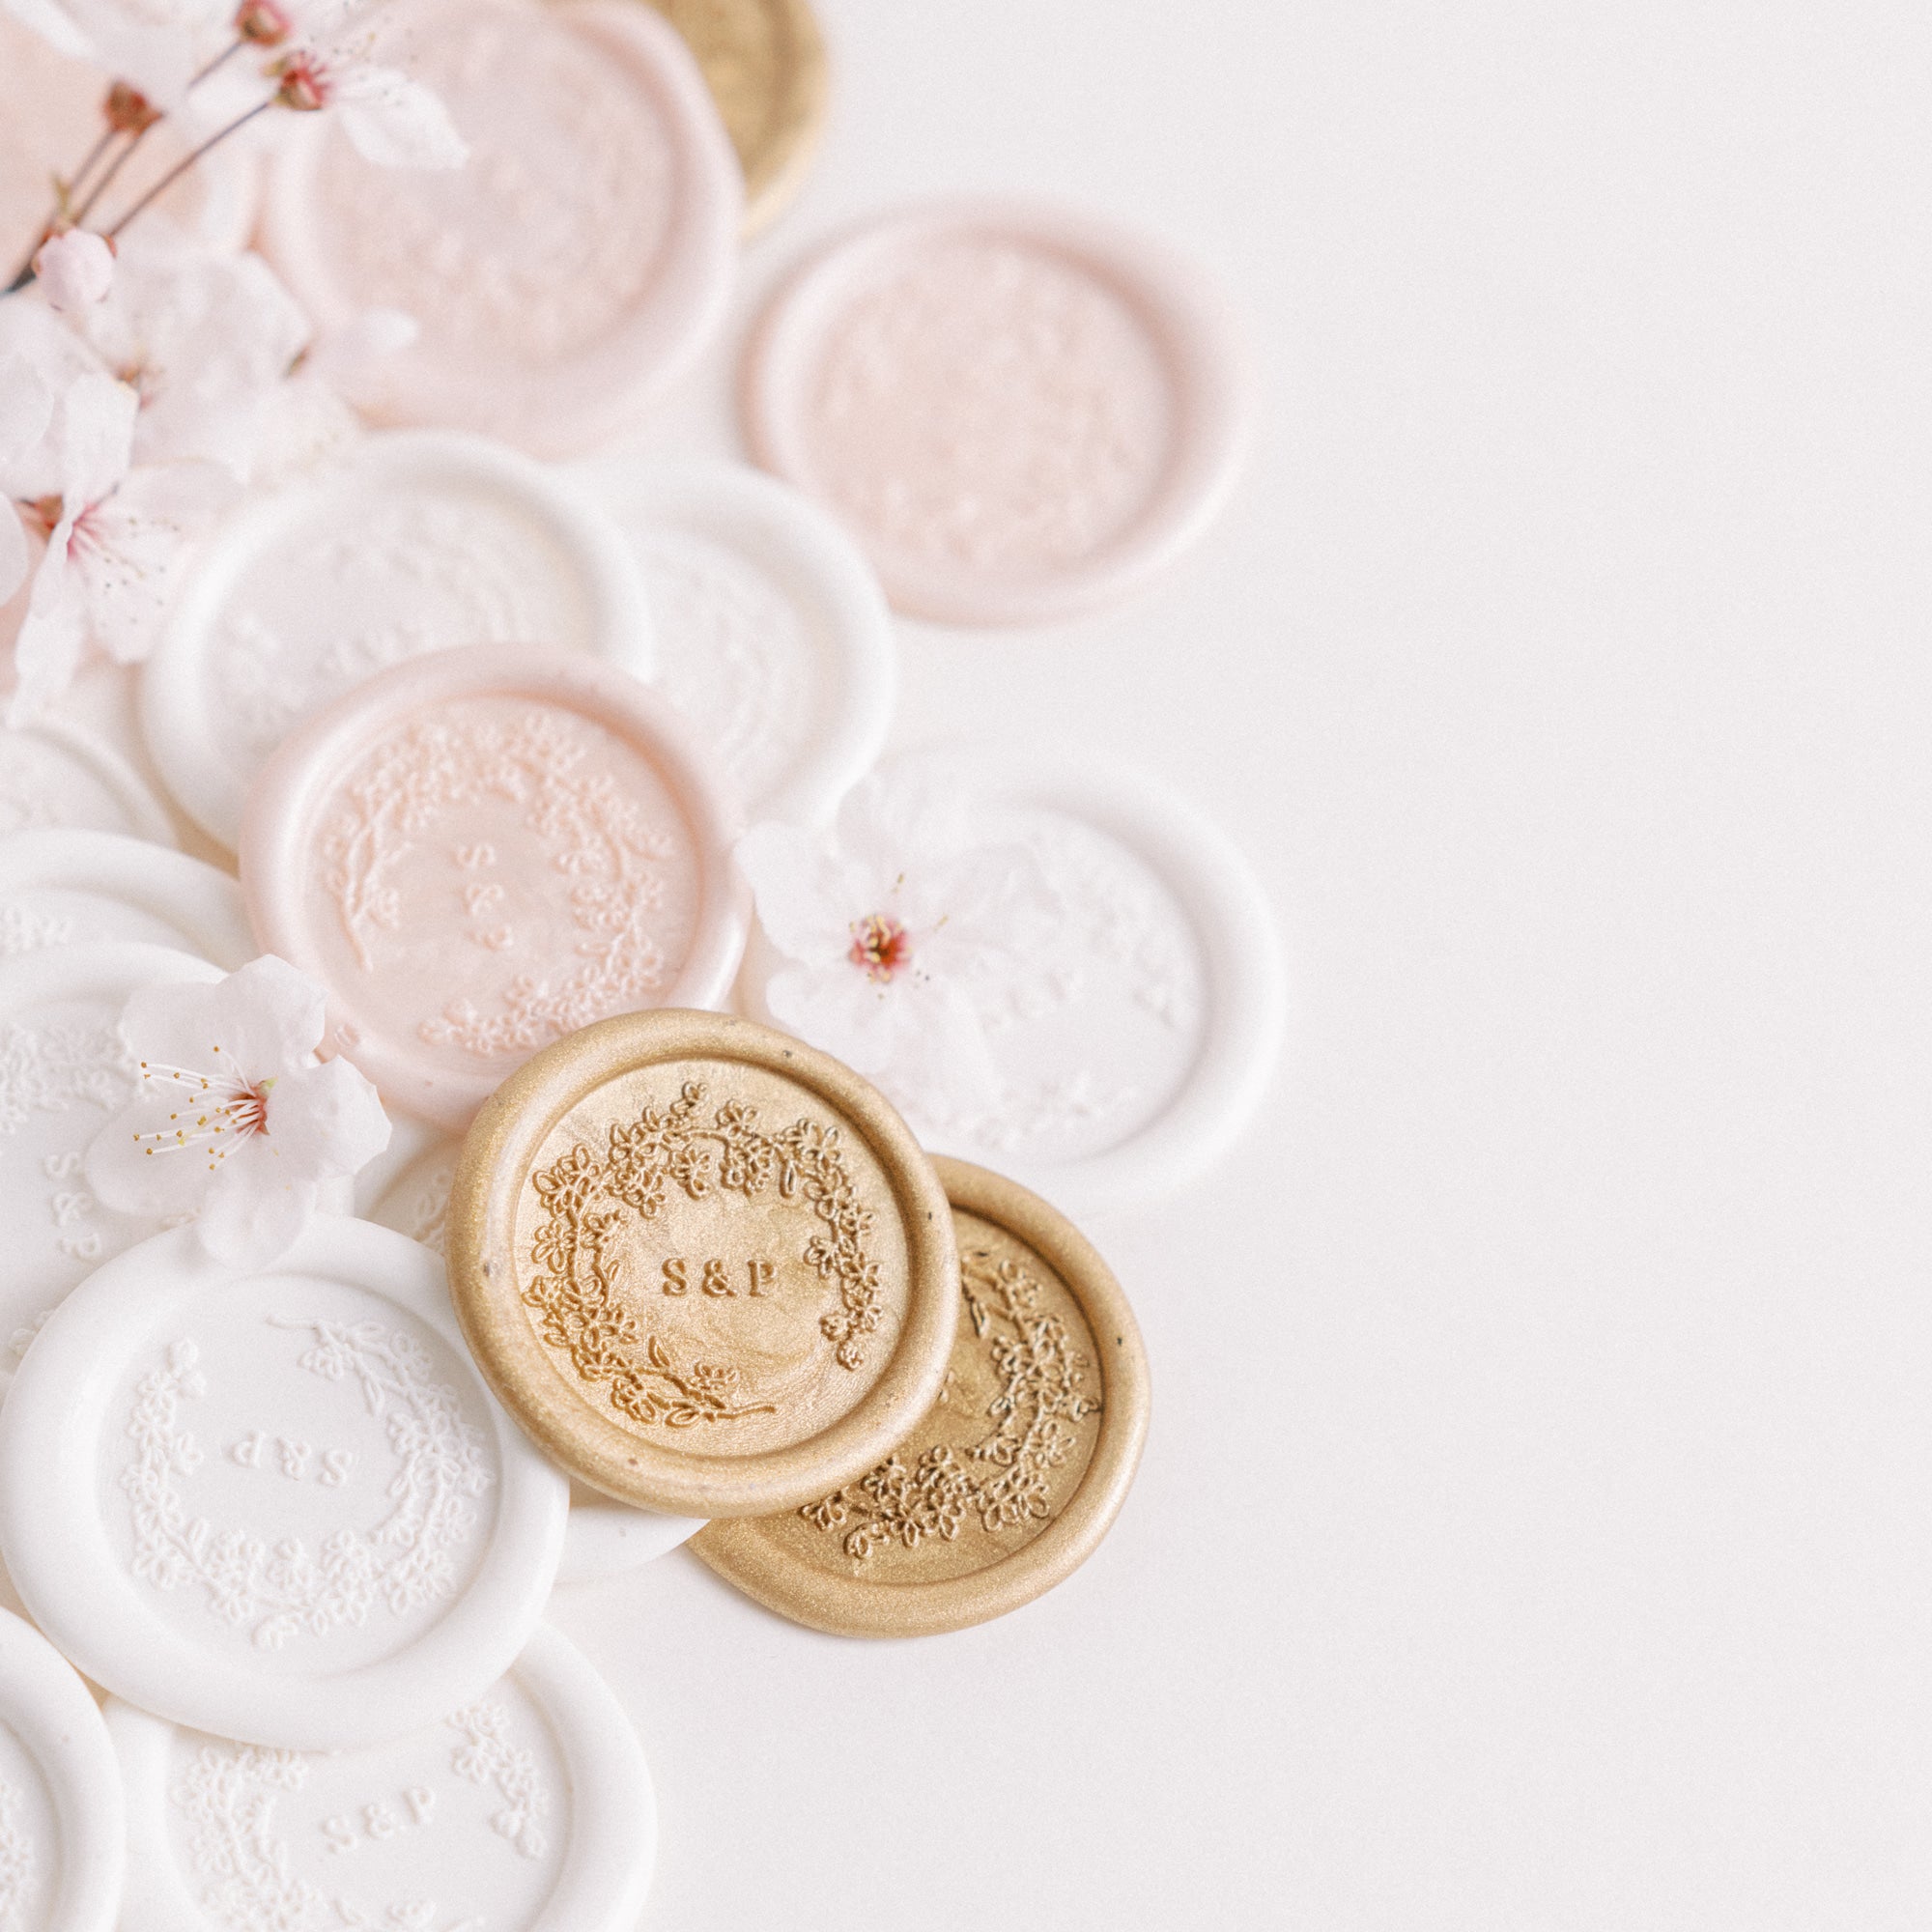 Ichika Cherry Blossom Monogram Wax Seals for Fine Art Weddings | Cherry Blossom Embellishments for Blush Pink Spring Weddings | Heirloom Seals